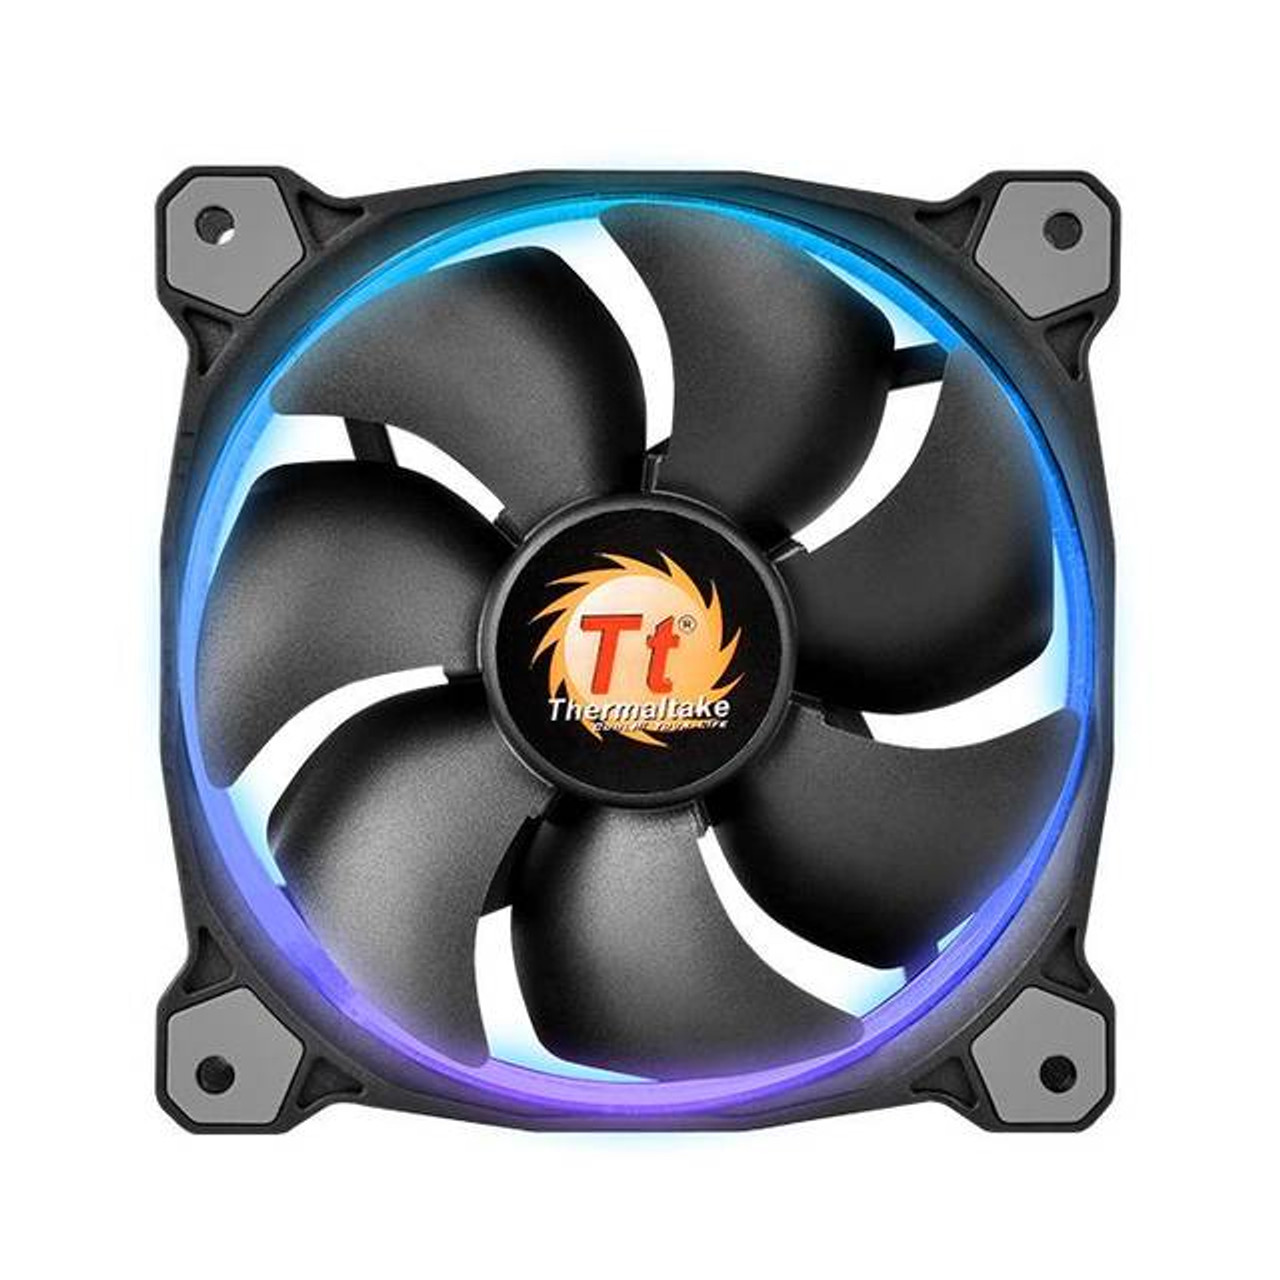 Thermaltake Riing 14 RGB Series 140mm LED RGB 256 Colors Case Fan (Triple Pack)